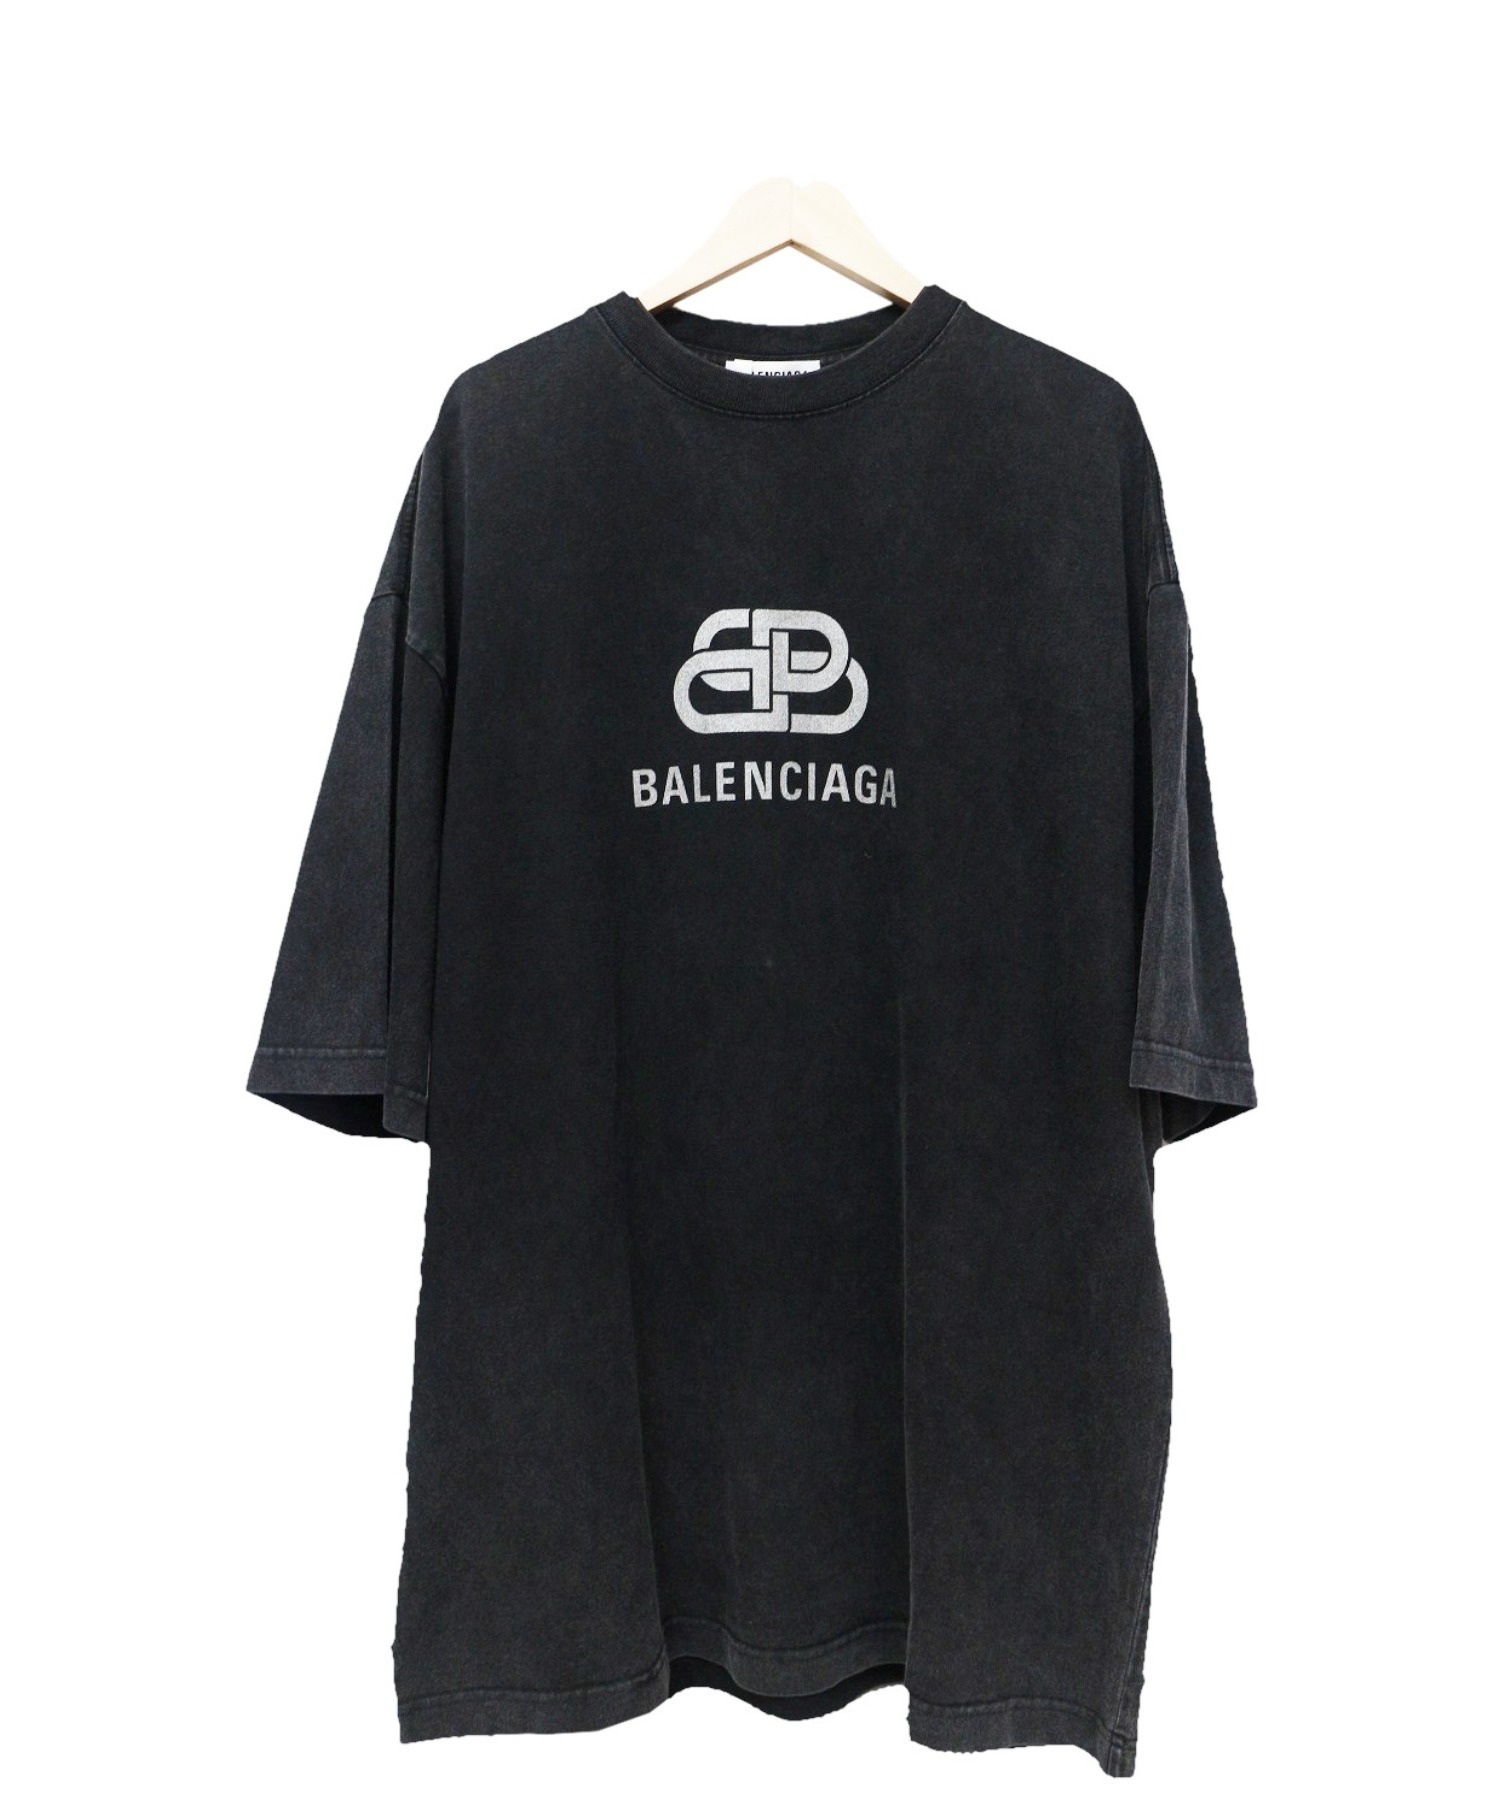 BALENCIAGA (バレンシアガ) BBロゴプリントTシャツ ブラック サイズ:XS